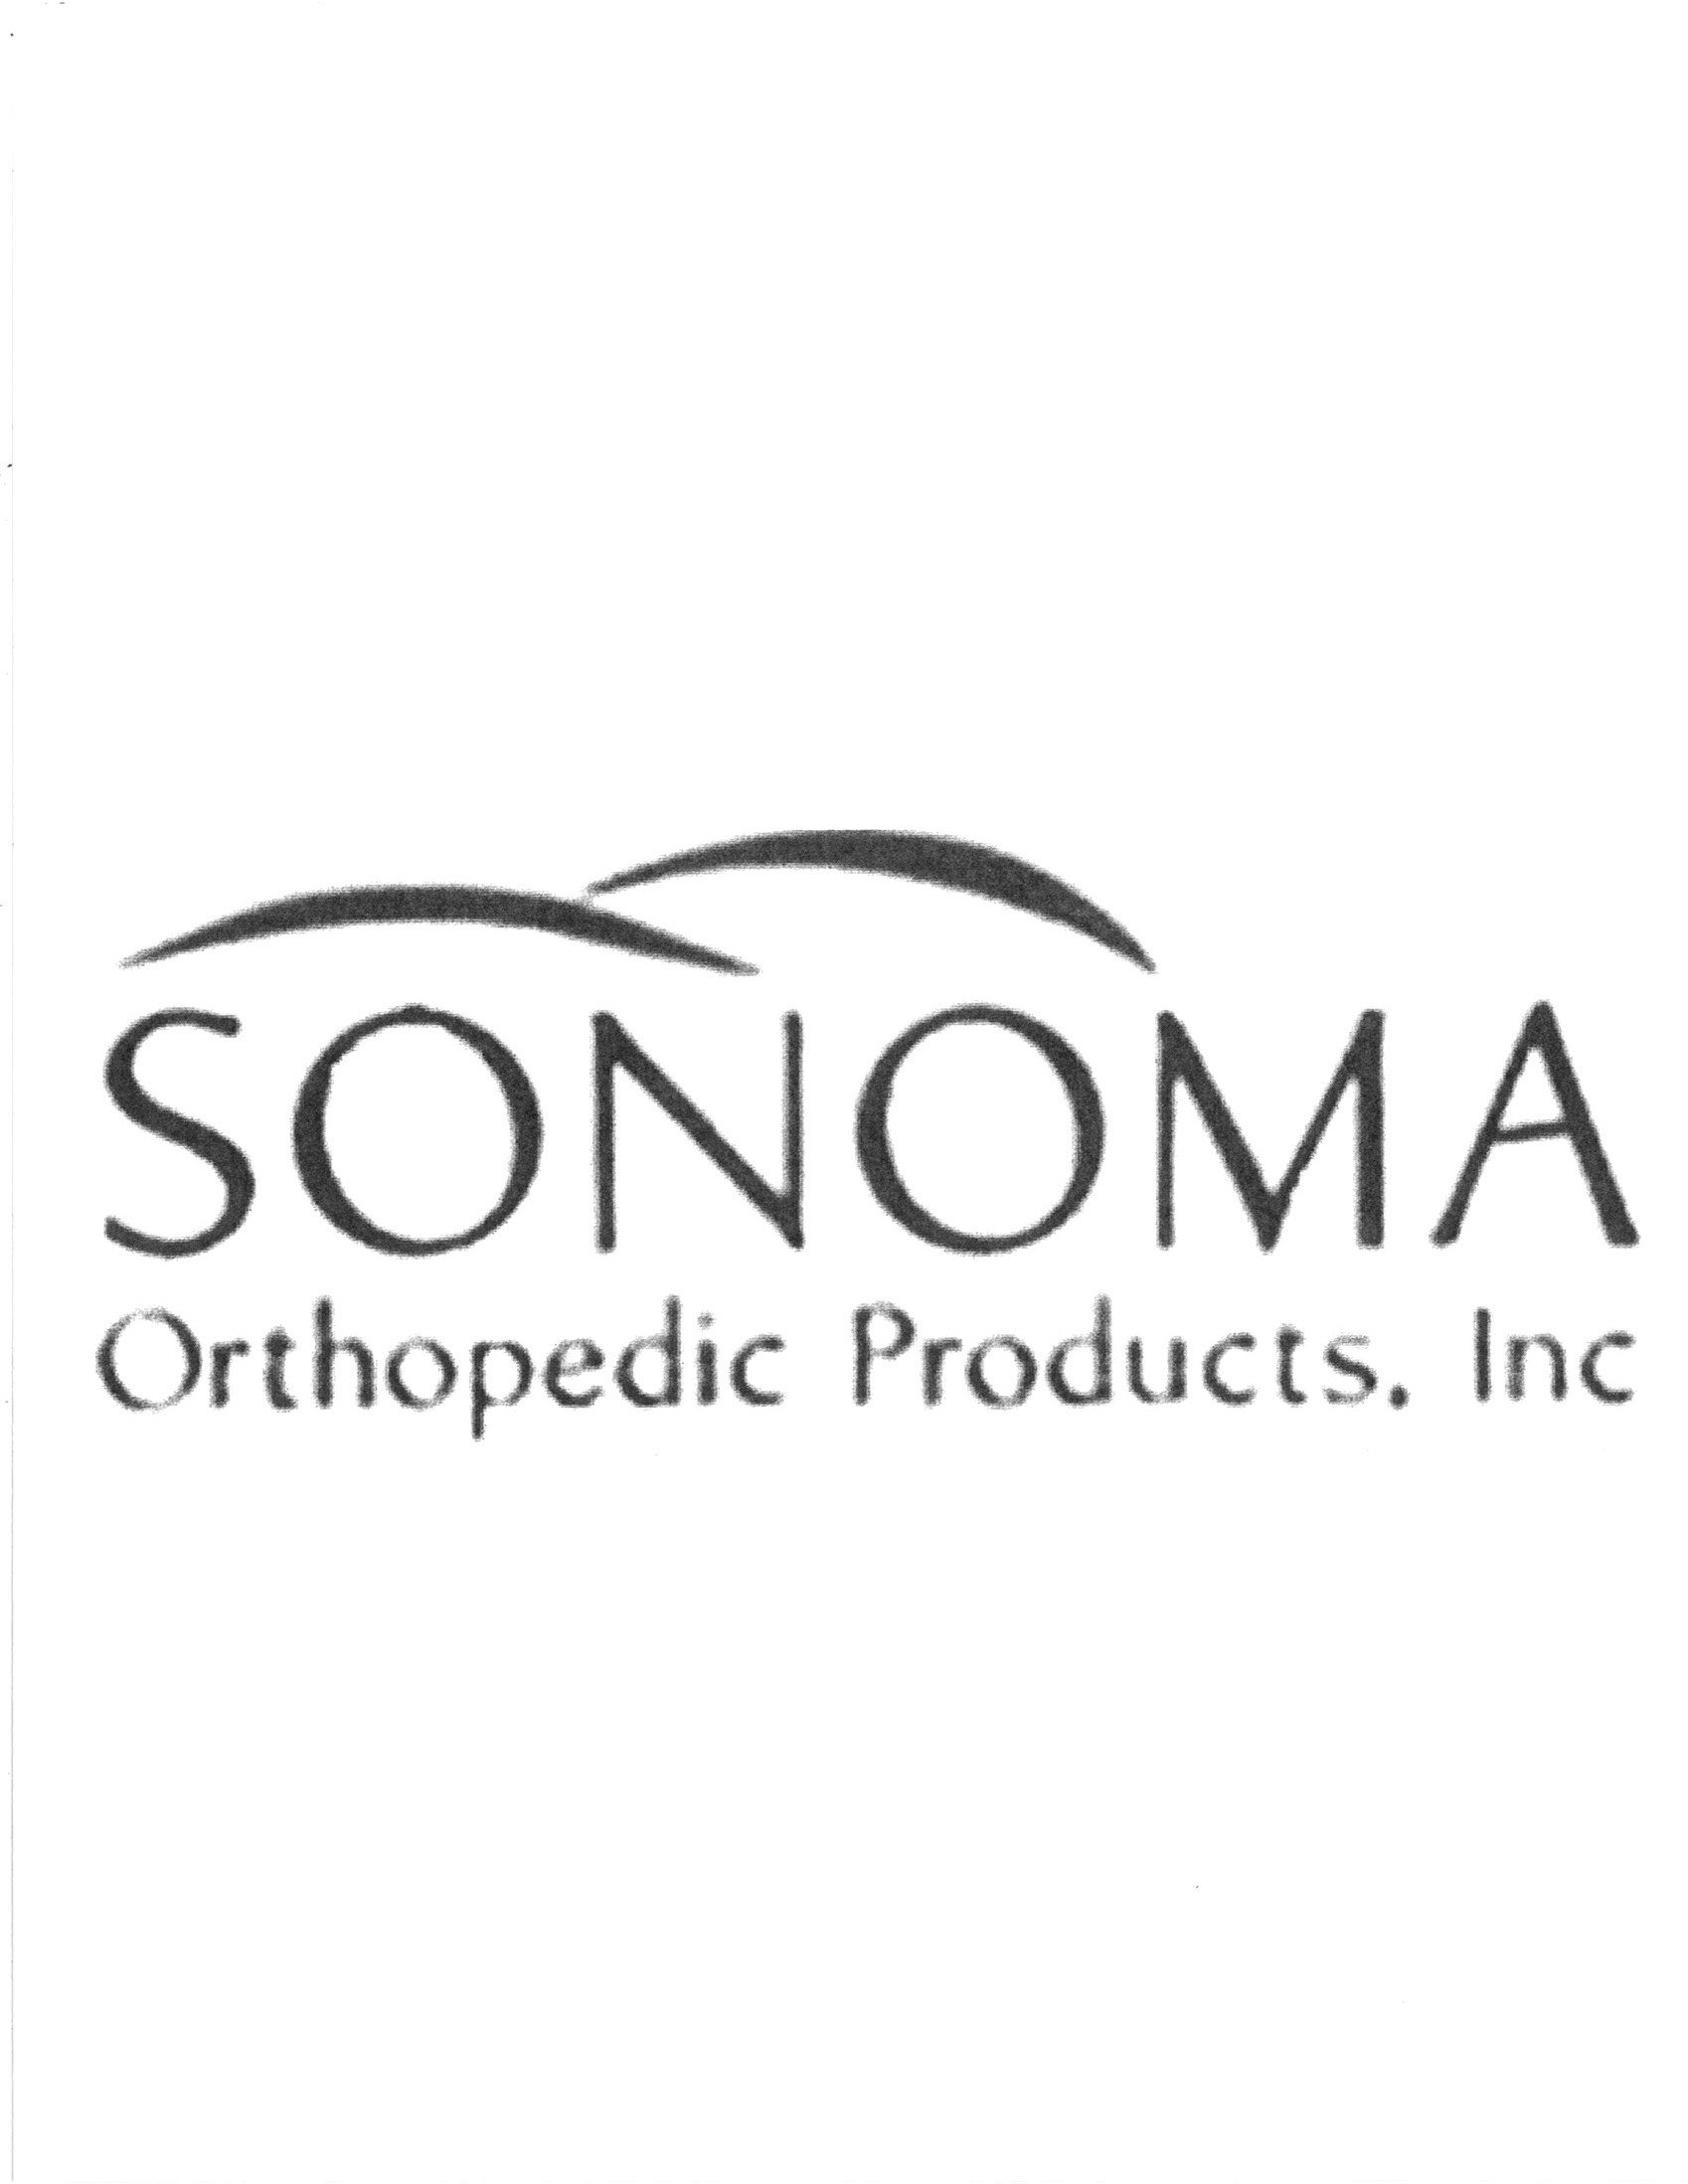 SONOMA ORTHOPEDIC PRODUCTS, INC.